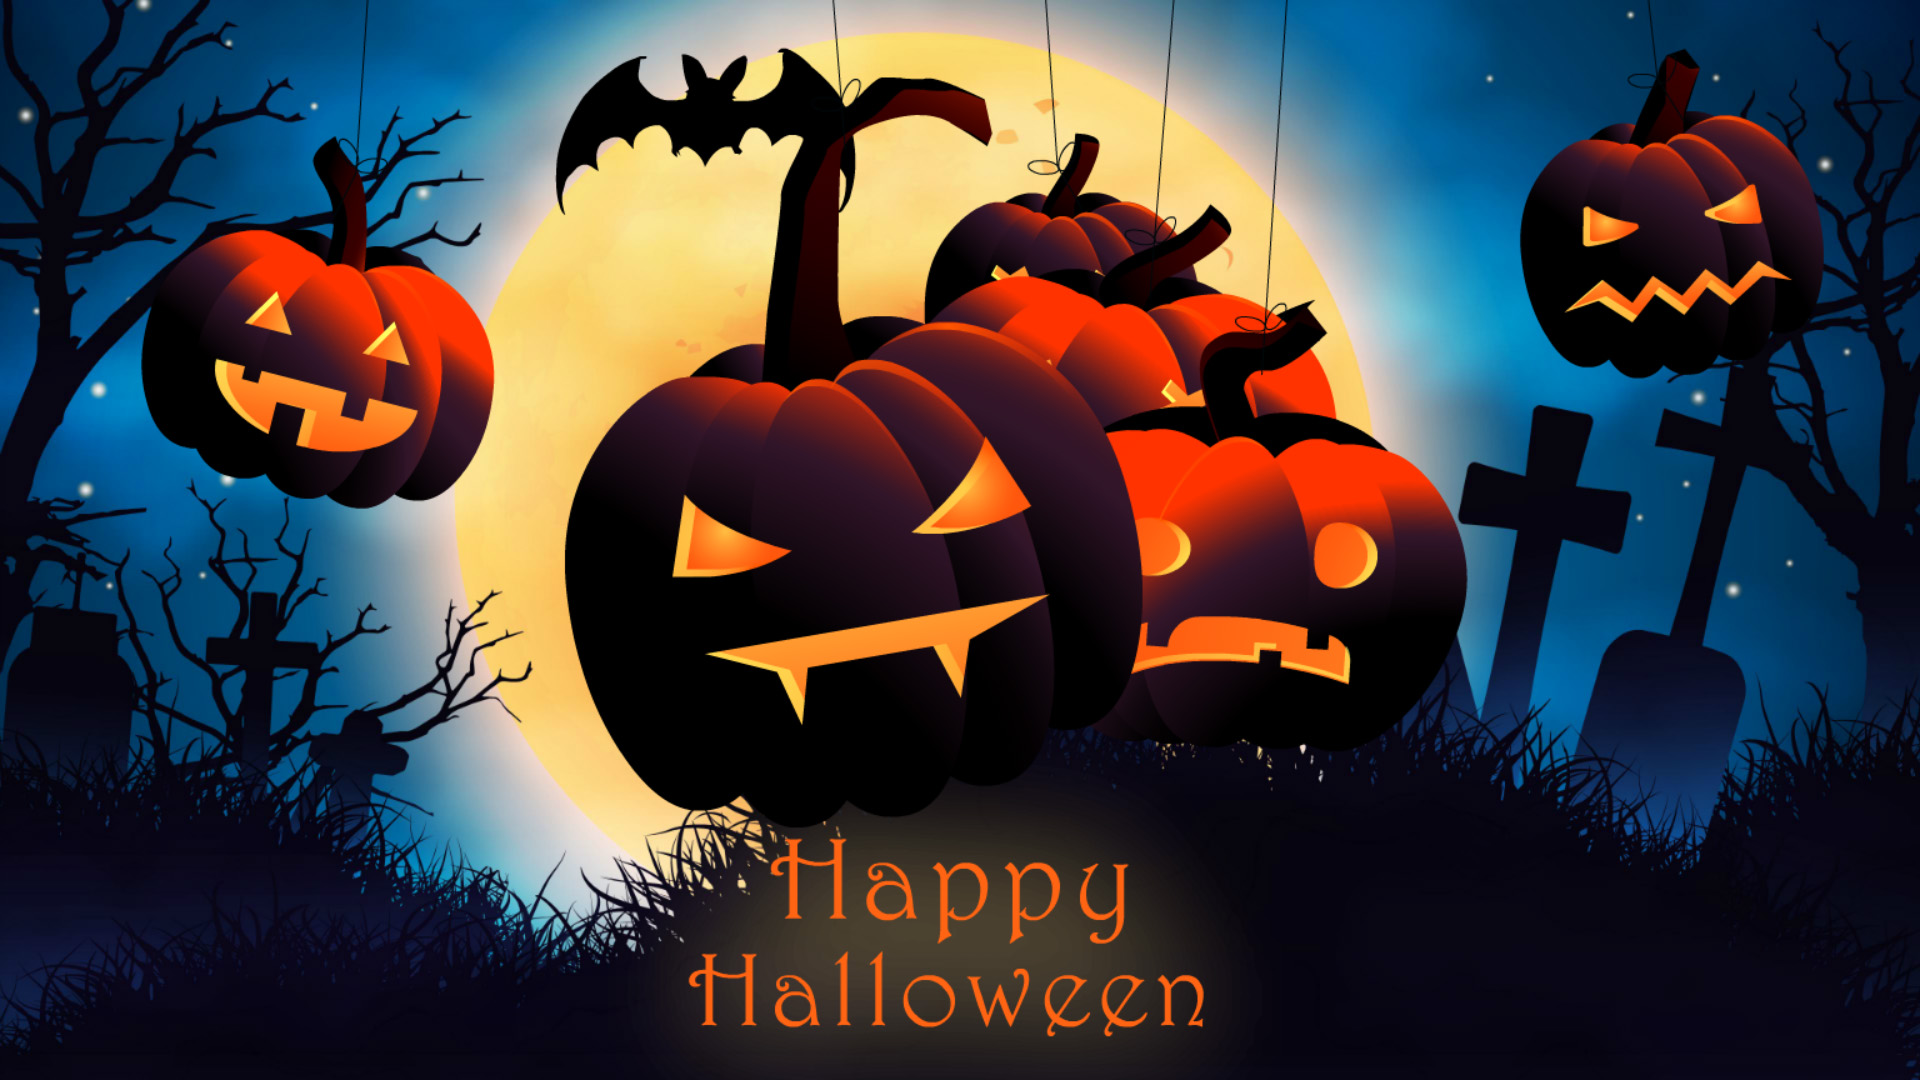 Free Halloween Screensaver for Windows 10